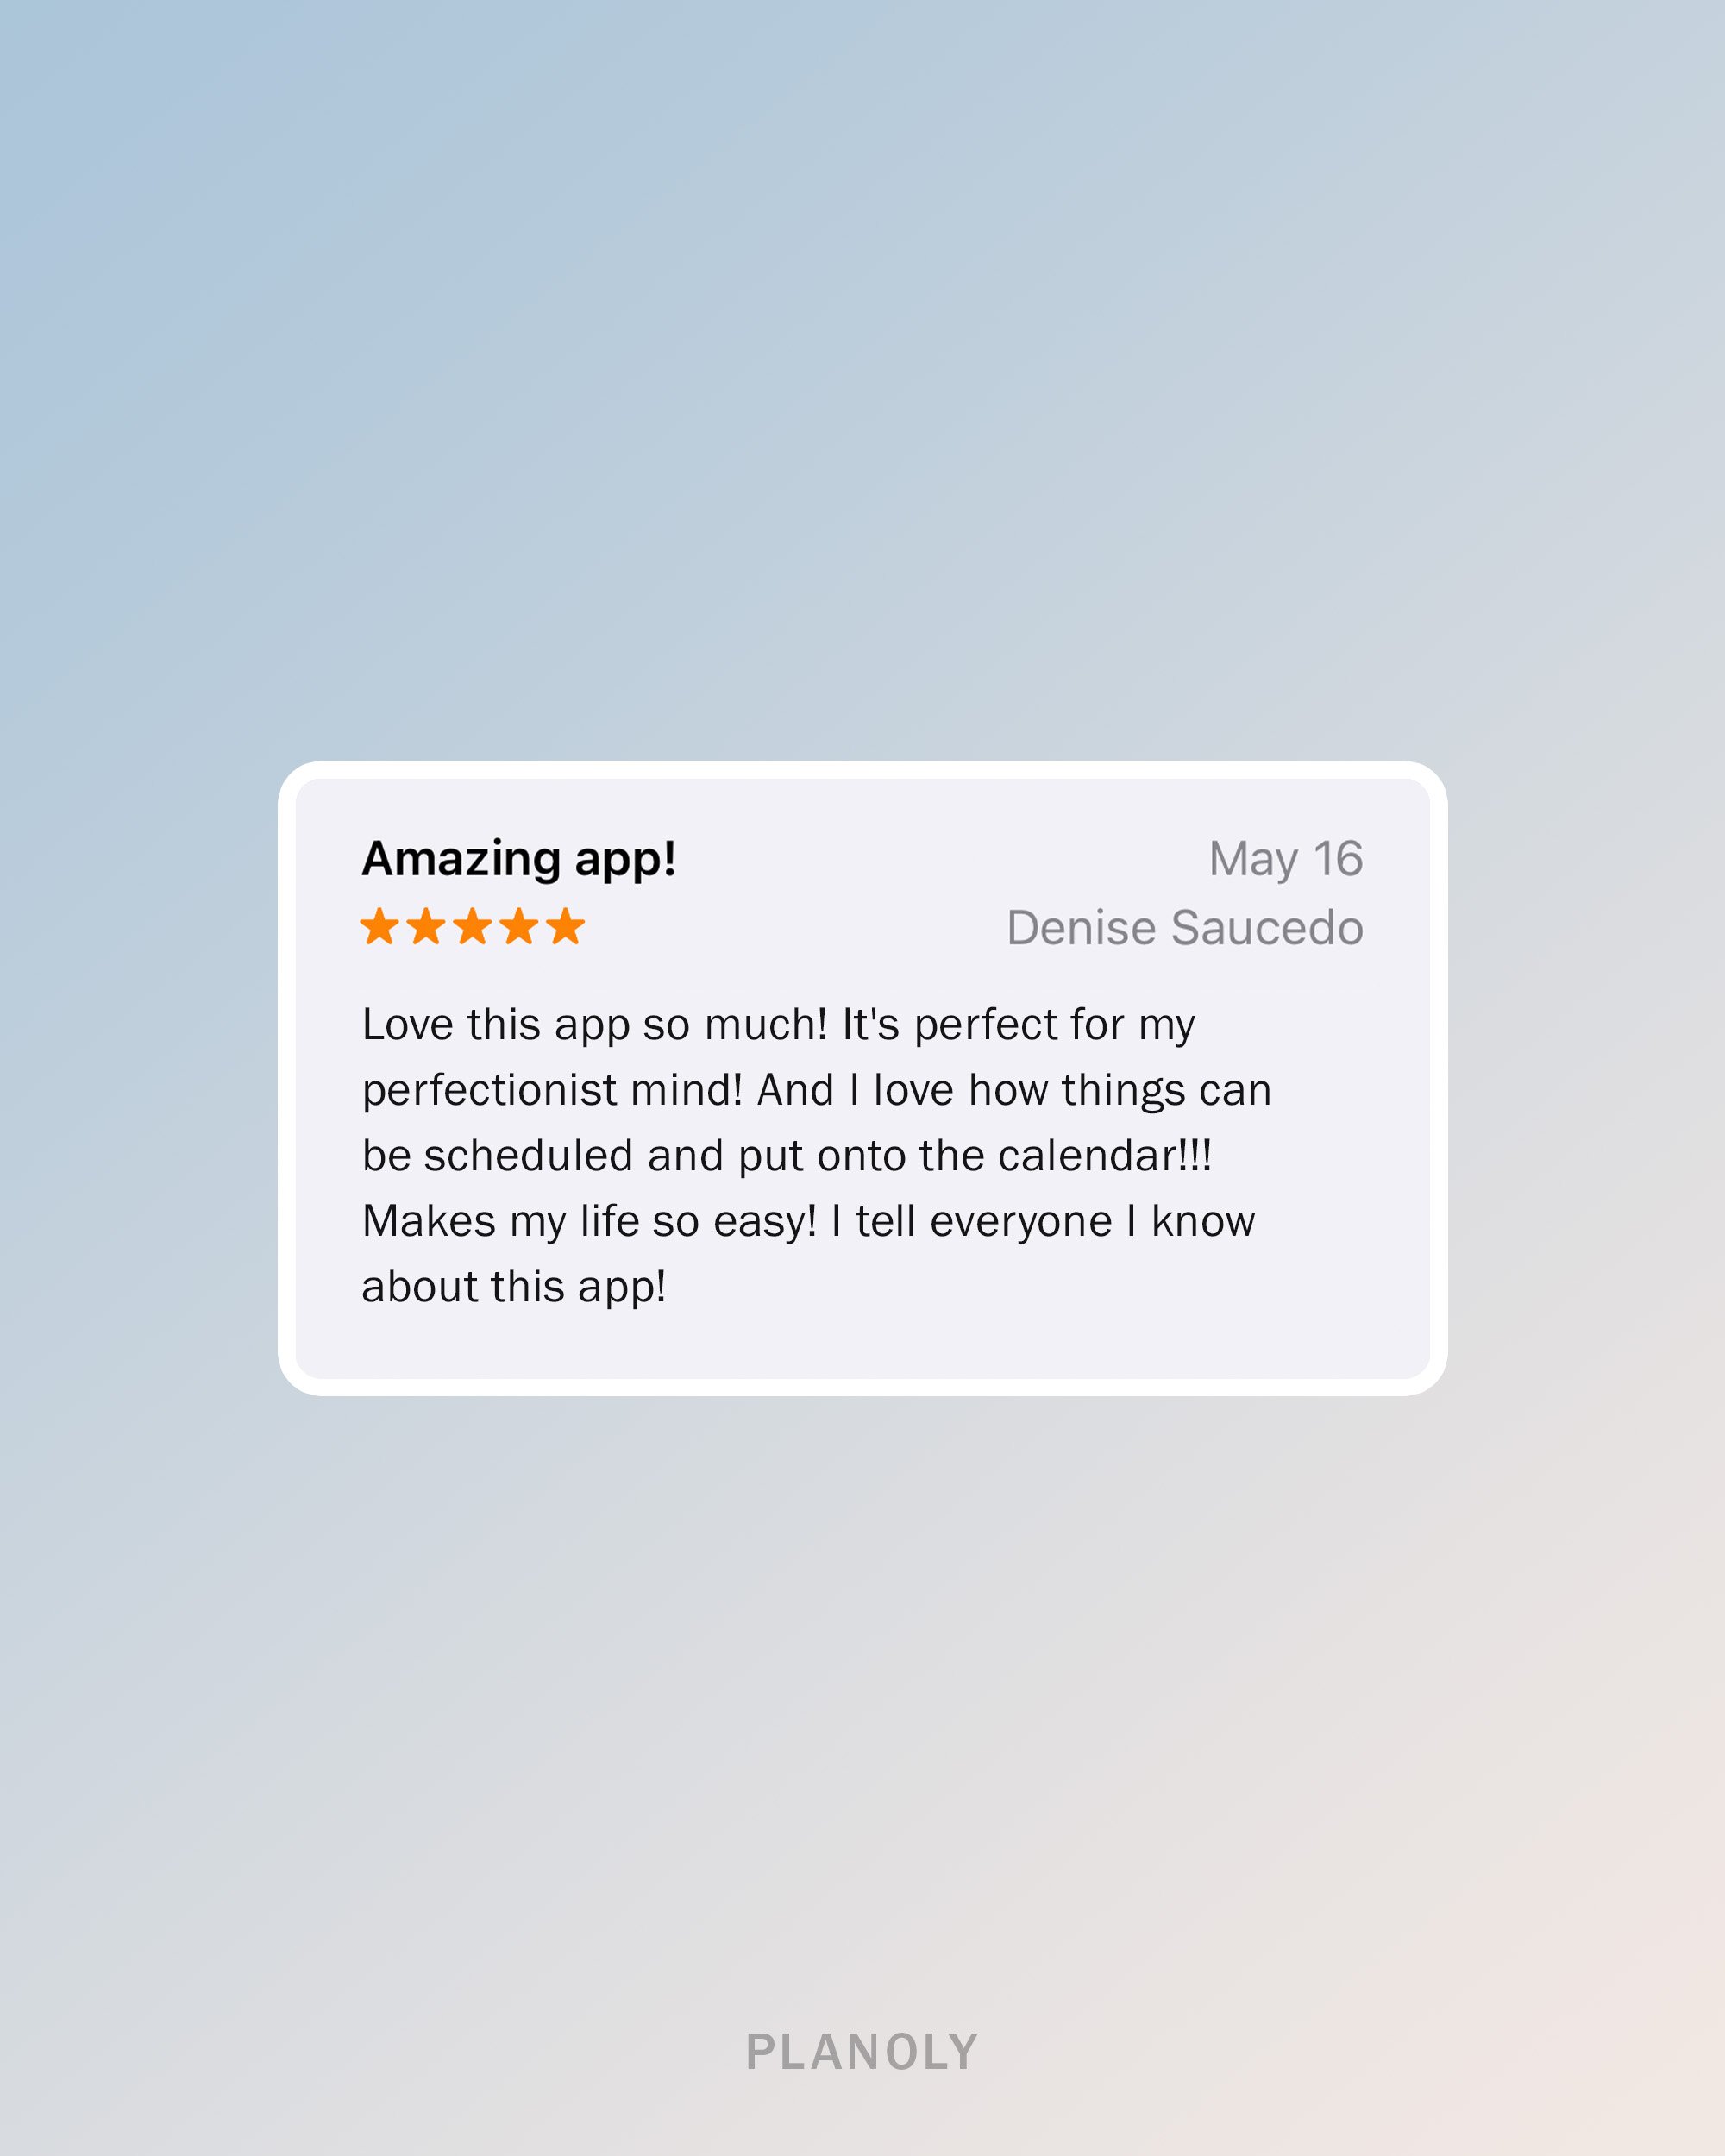 Reviews_Customer Reviews_iOS App Reviews_IG Grid_Aug 22_5.jpg